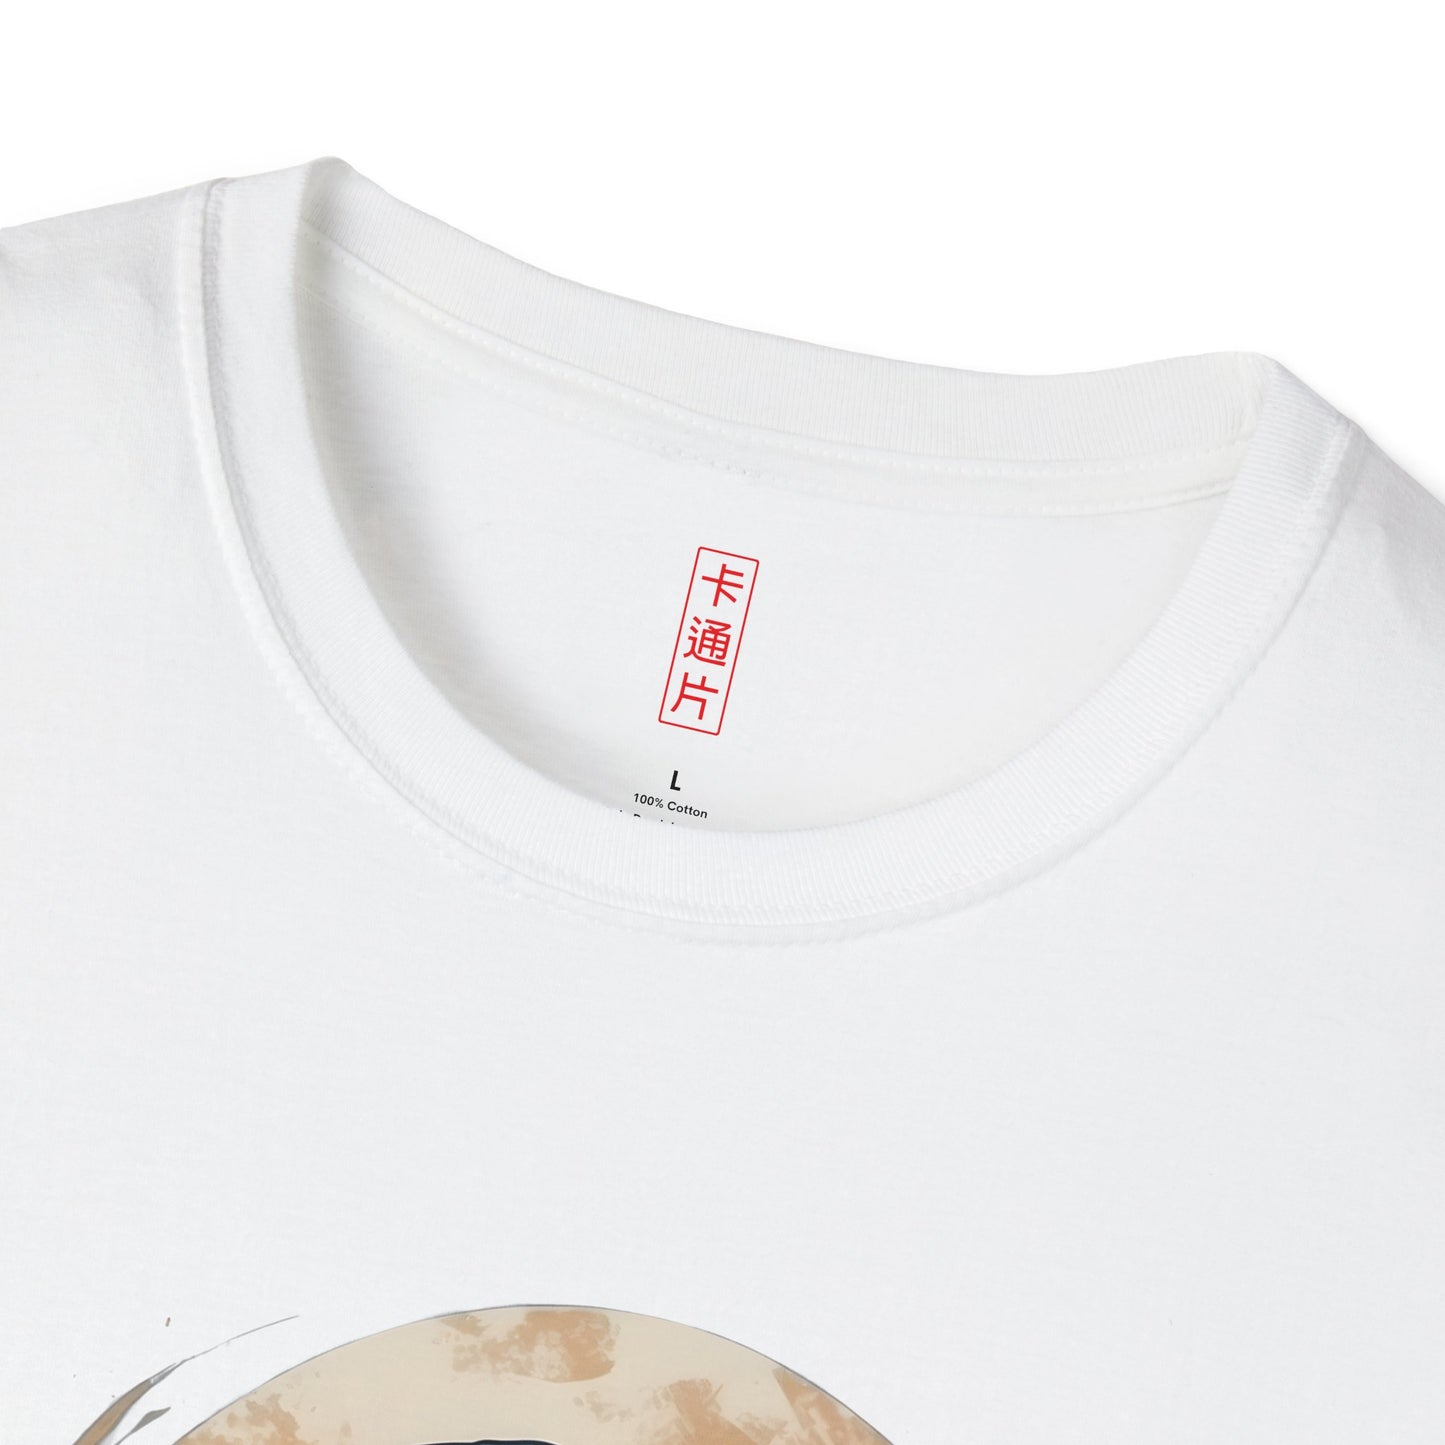 Kǎtōng Piàn - California Love Collection - 017 - Unisex Softstyle T-Shirt Printify